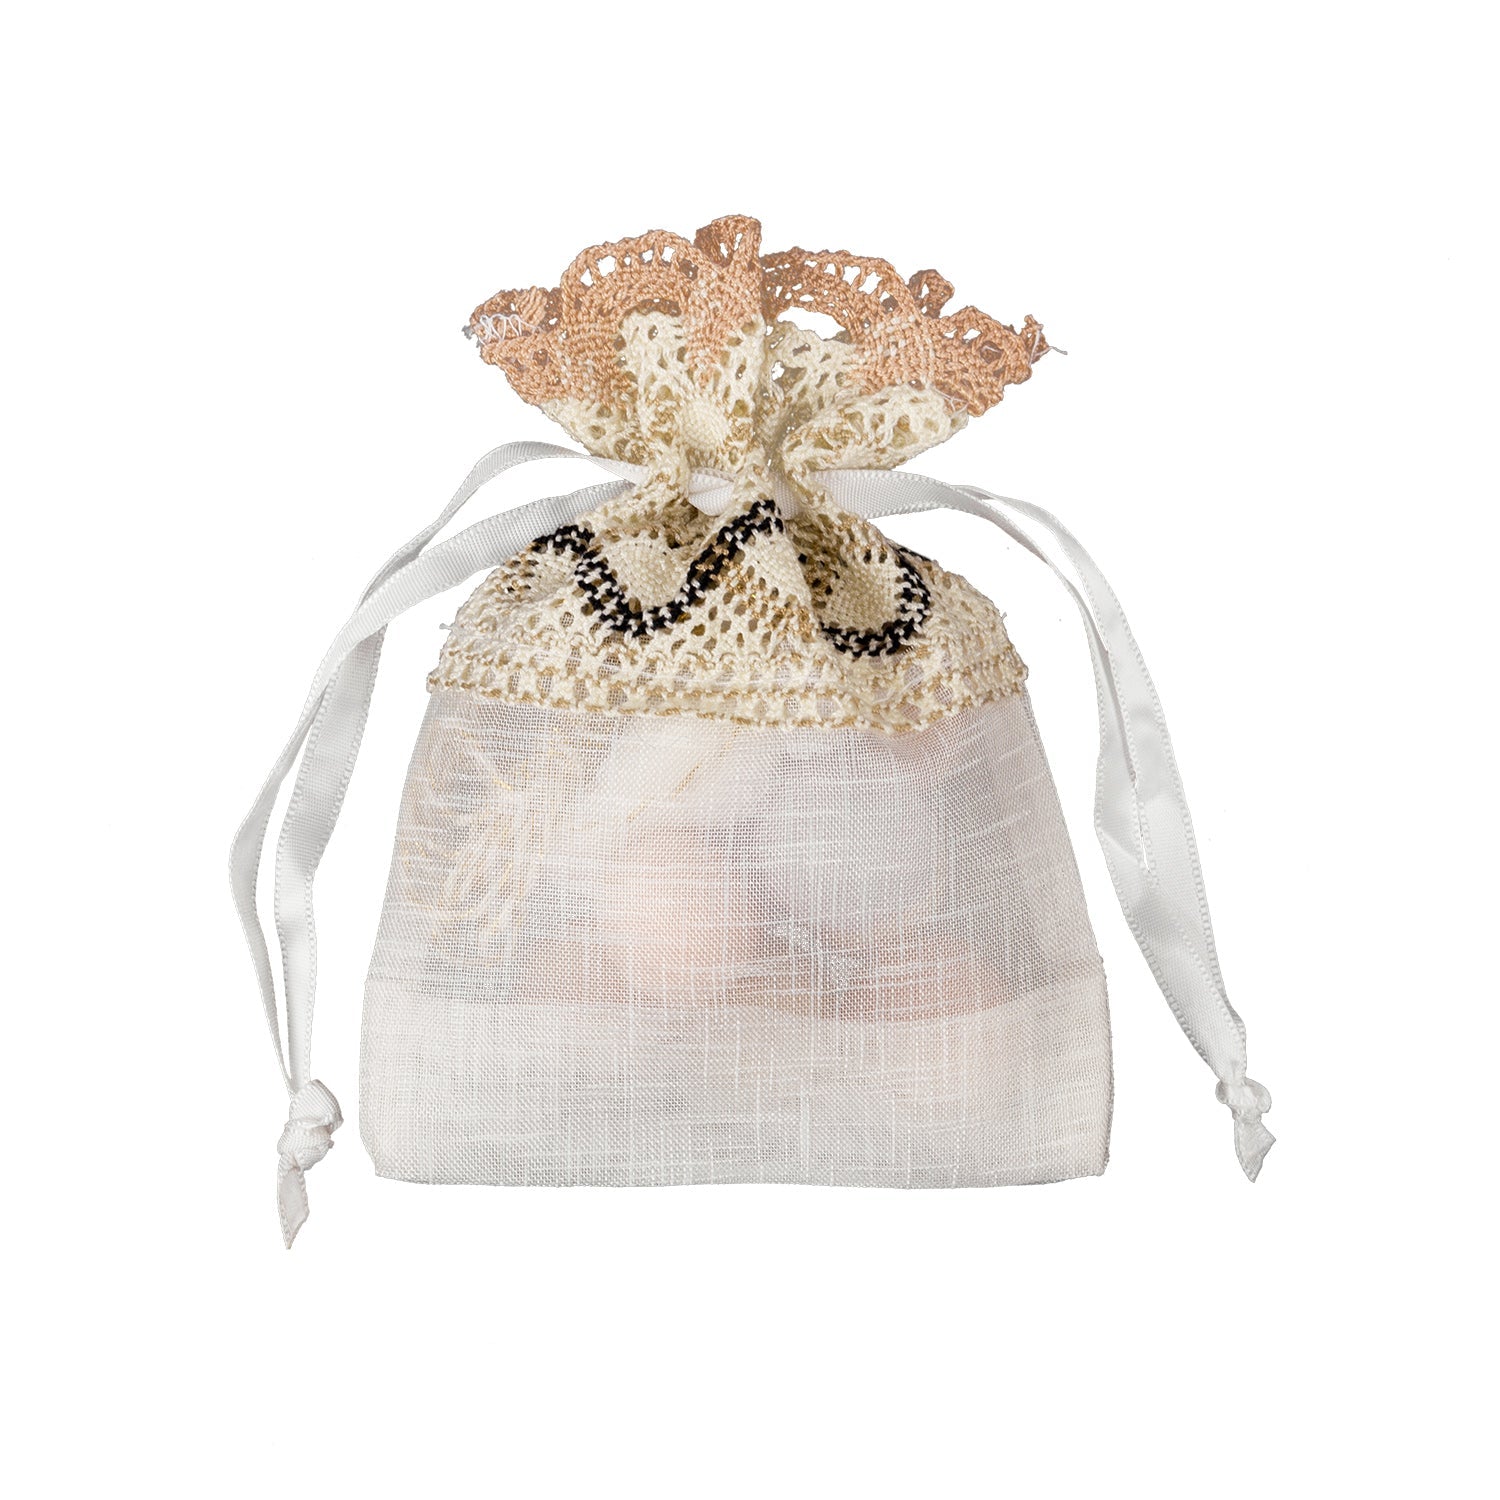 Lace Drawstring Gift Bag - 4 x 5.5 inch